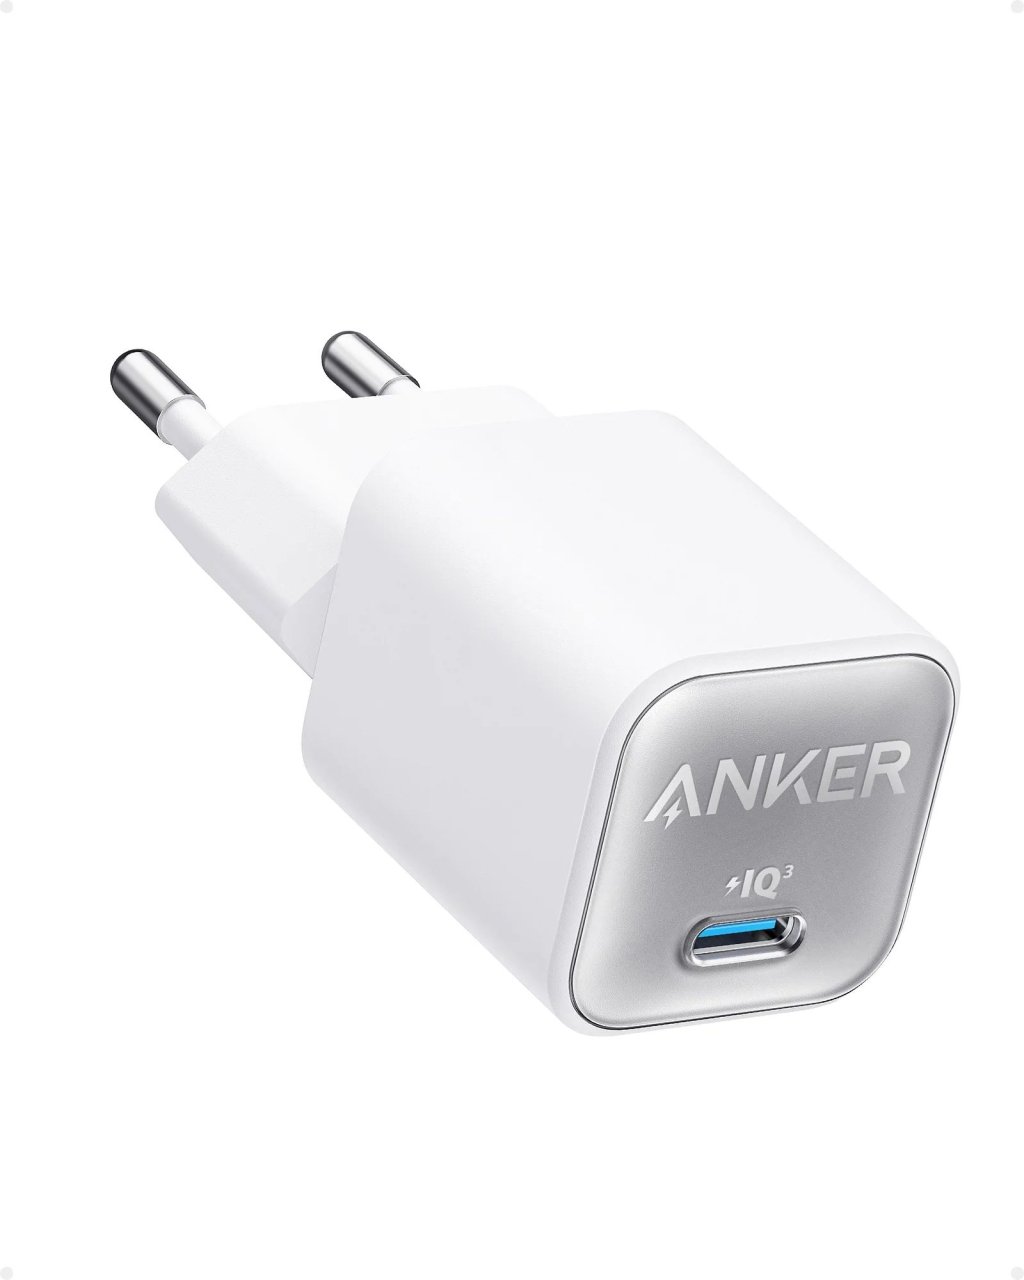 Anker 511 Nano 3 Power Adapter